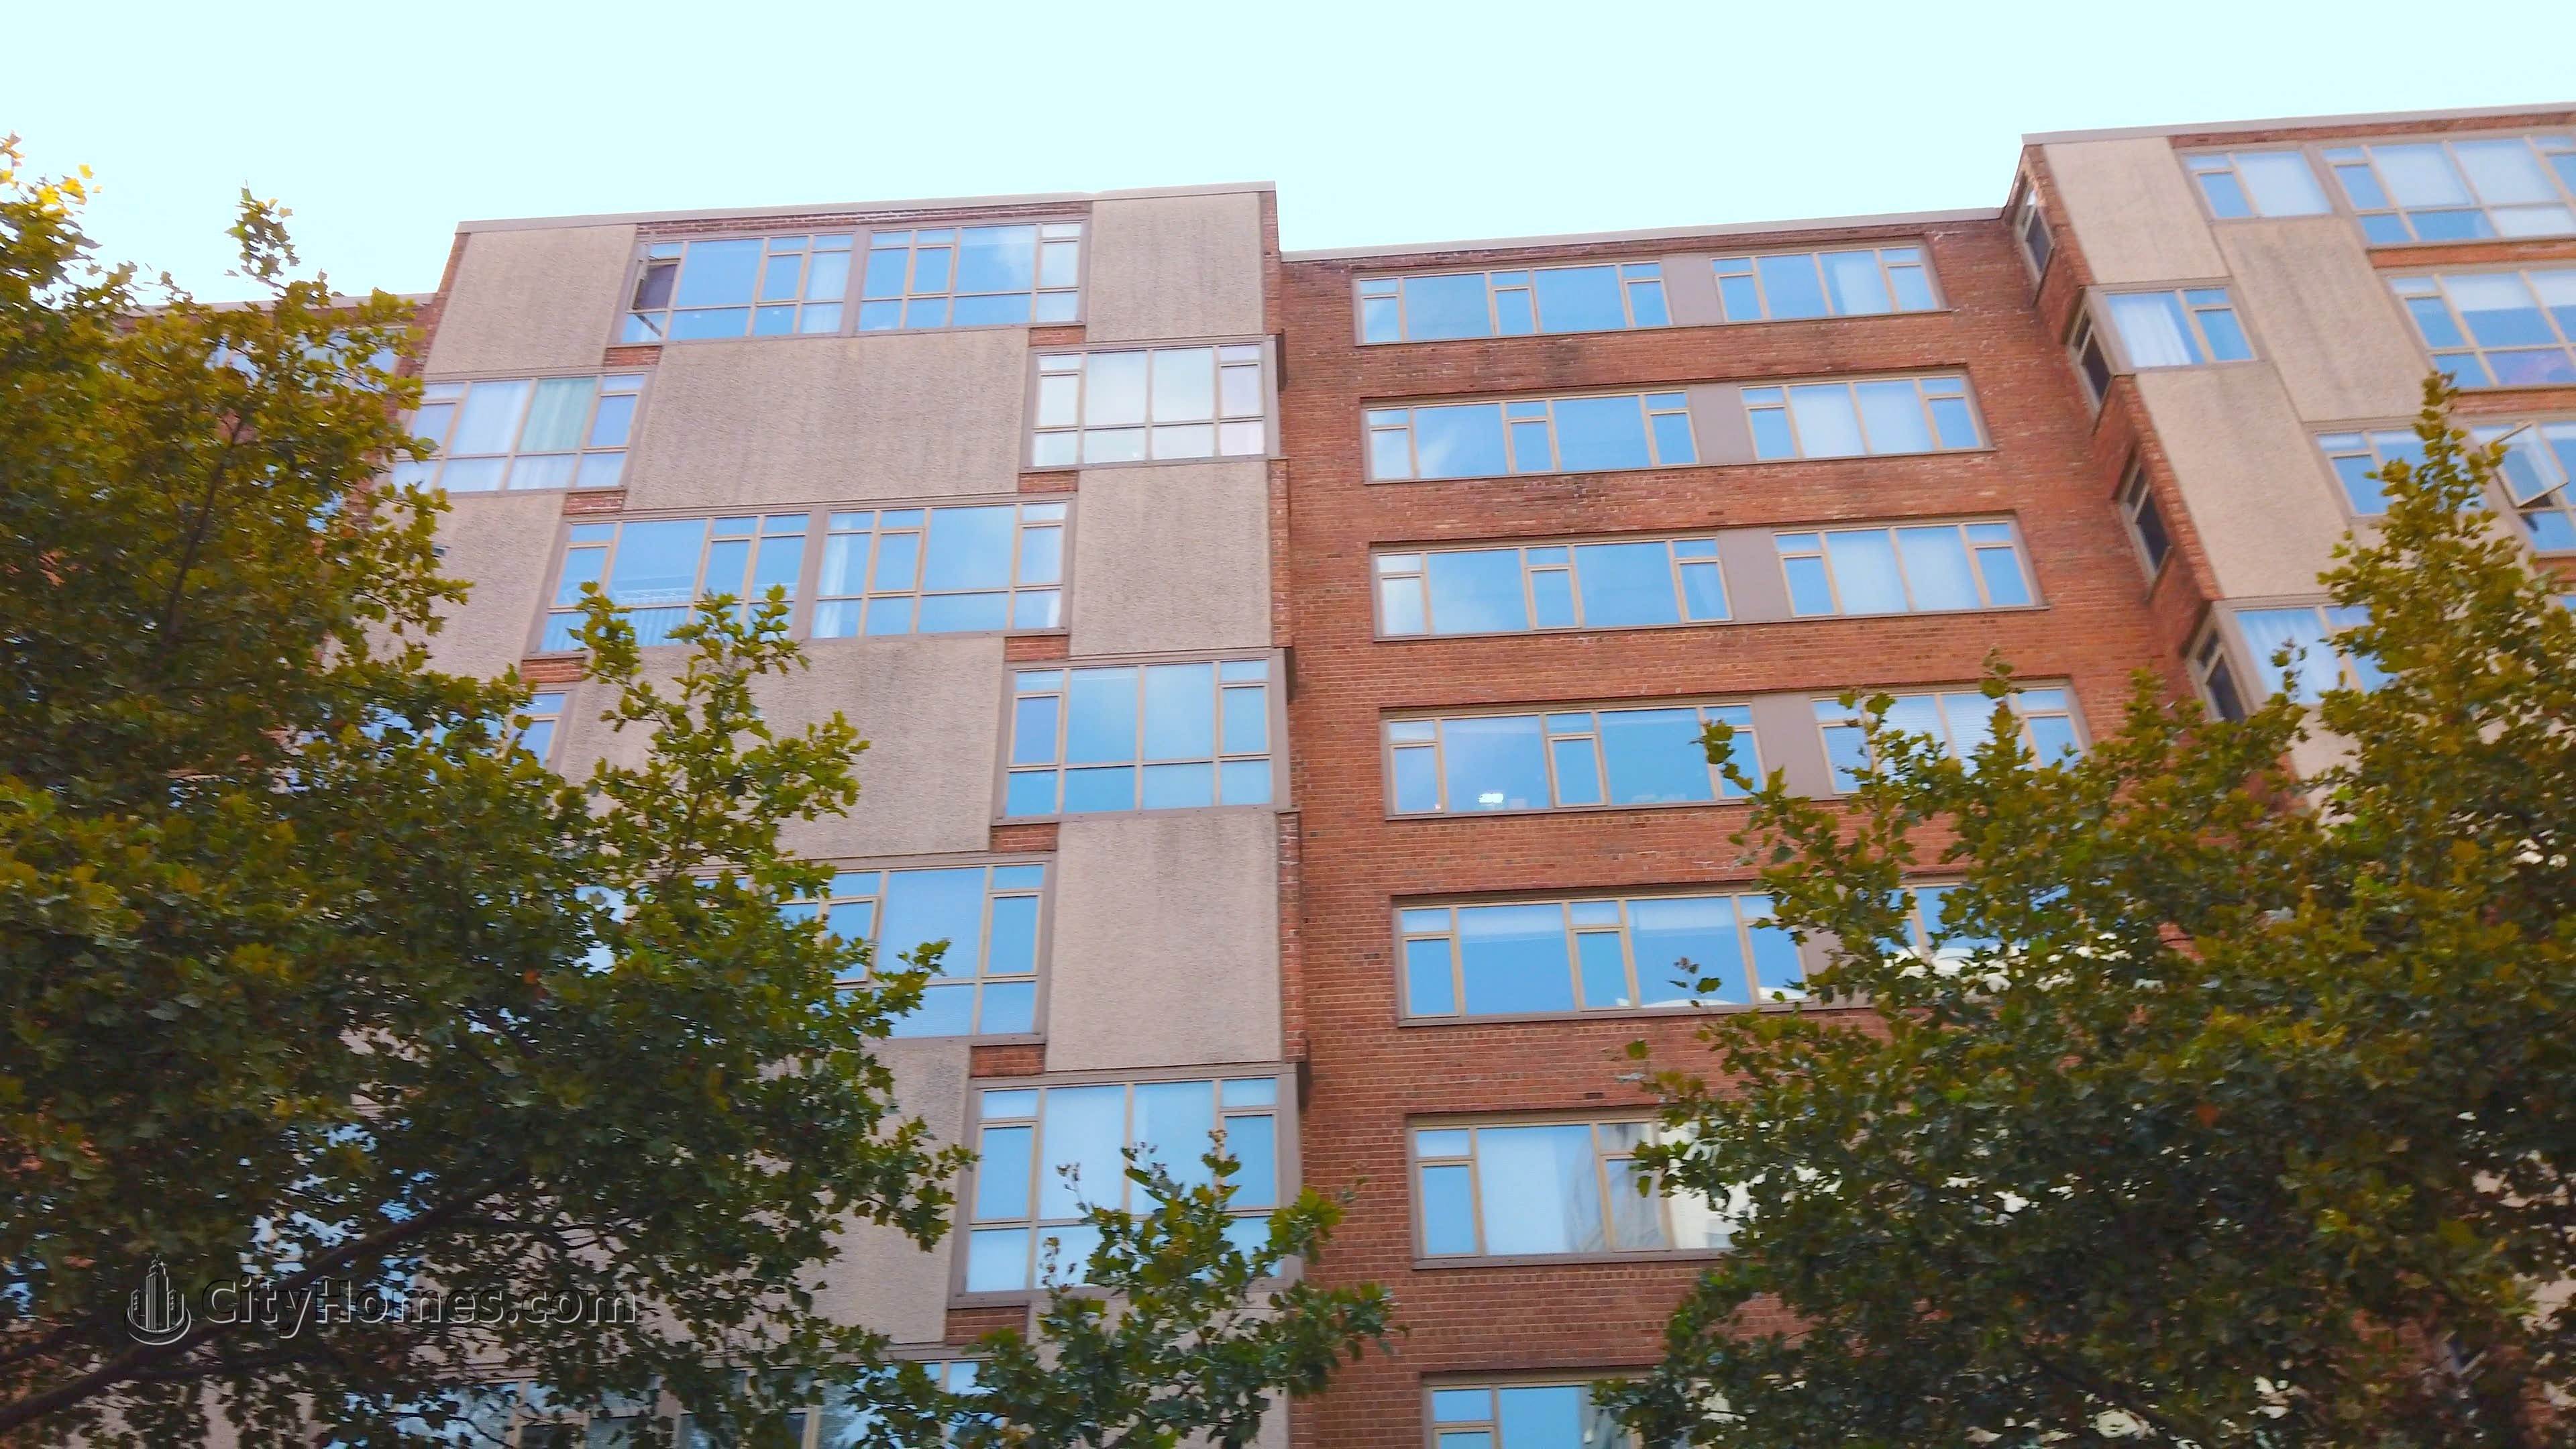 5. Dupont East edificio en 1545 18th St NW, Dupont Circle, Washington, DC 20036